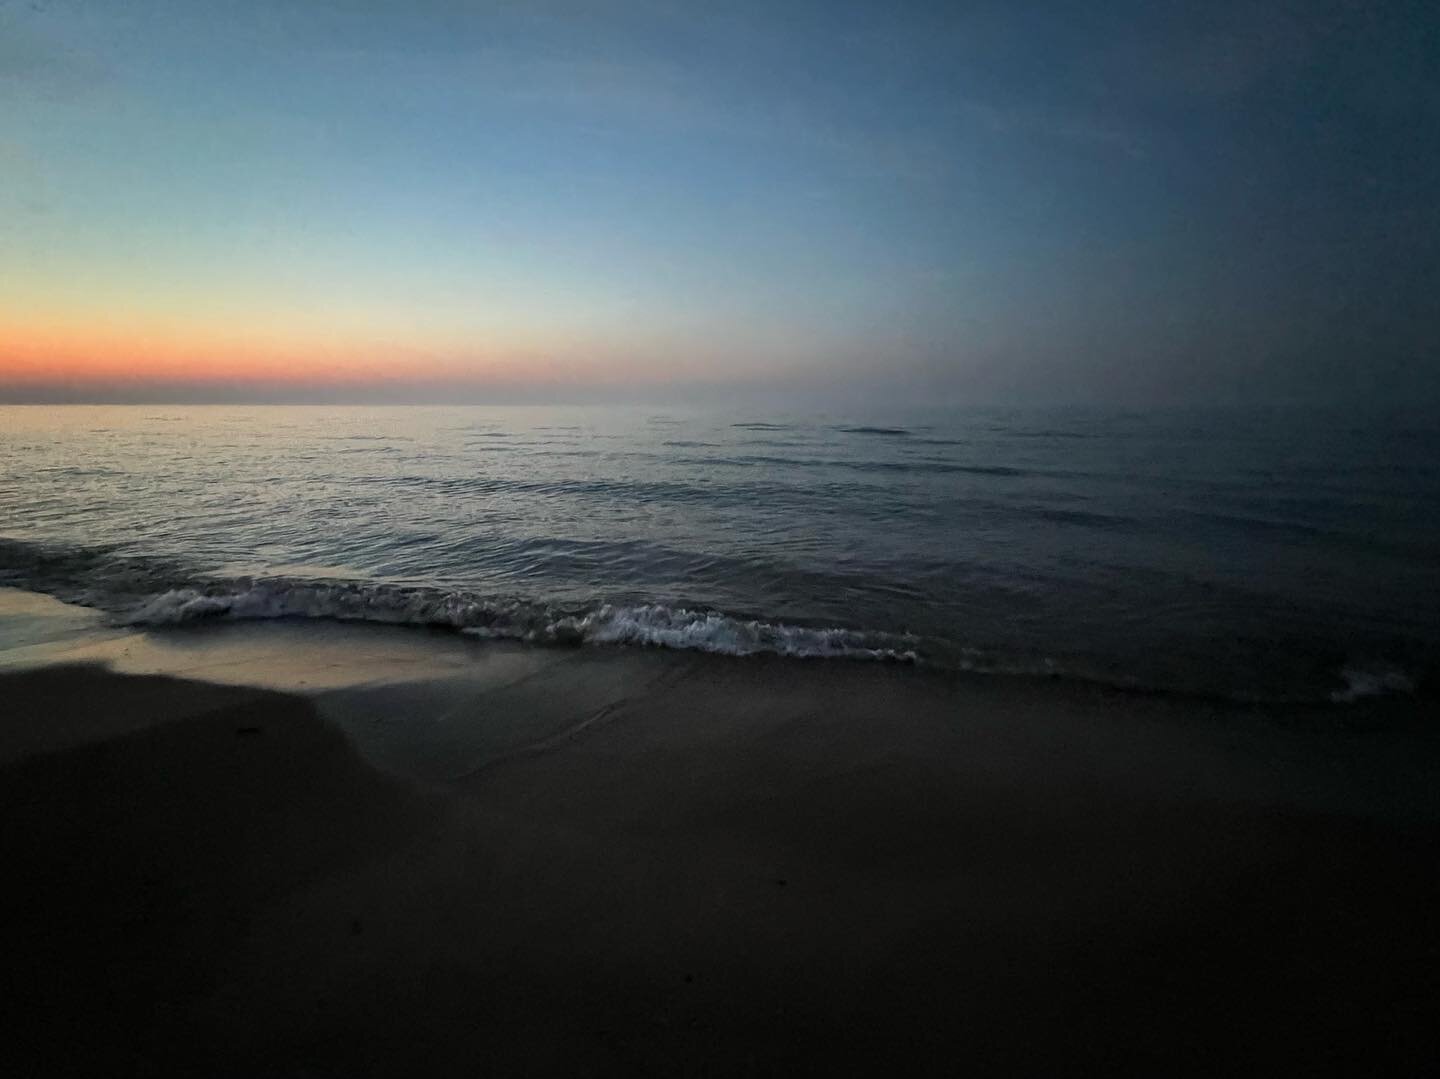 Dreamy blues at sunset #IndianasCoolNorth #visitindiana #visitmillerbeach #alongthesouthshore #garyindiana #beachlife #nationalpark #lakemichigan